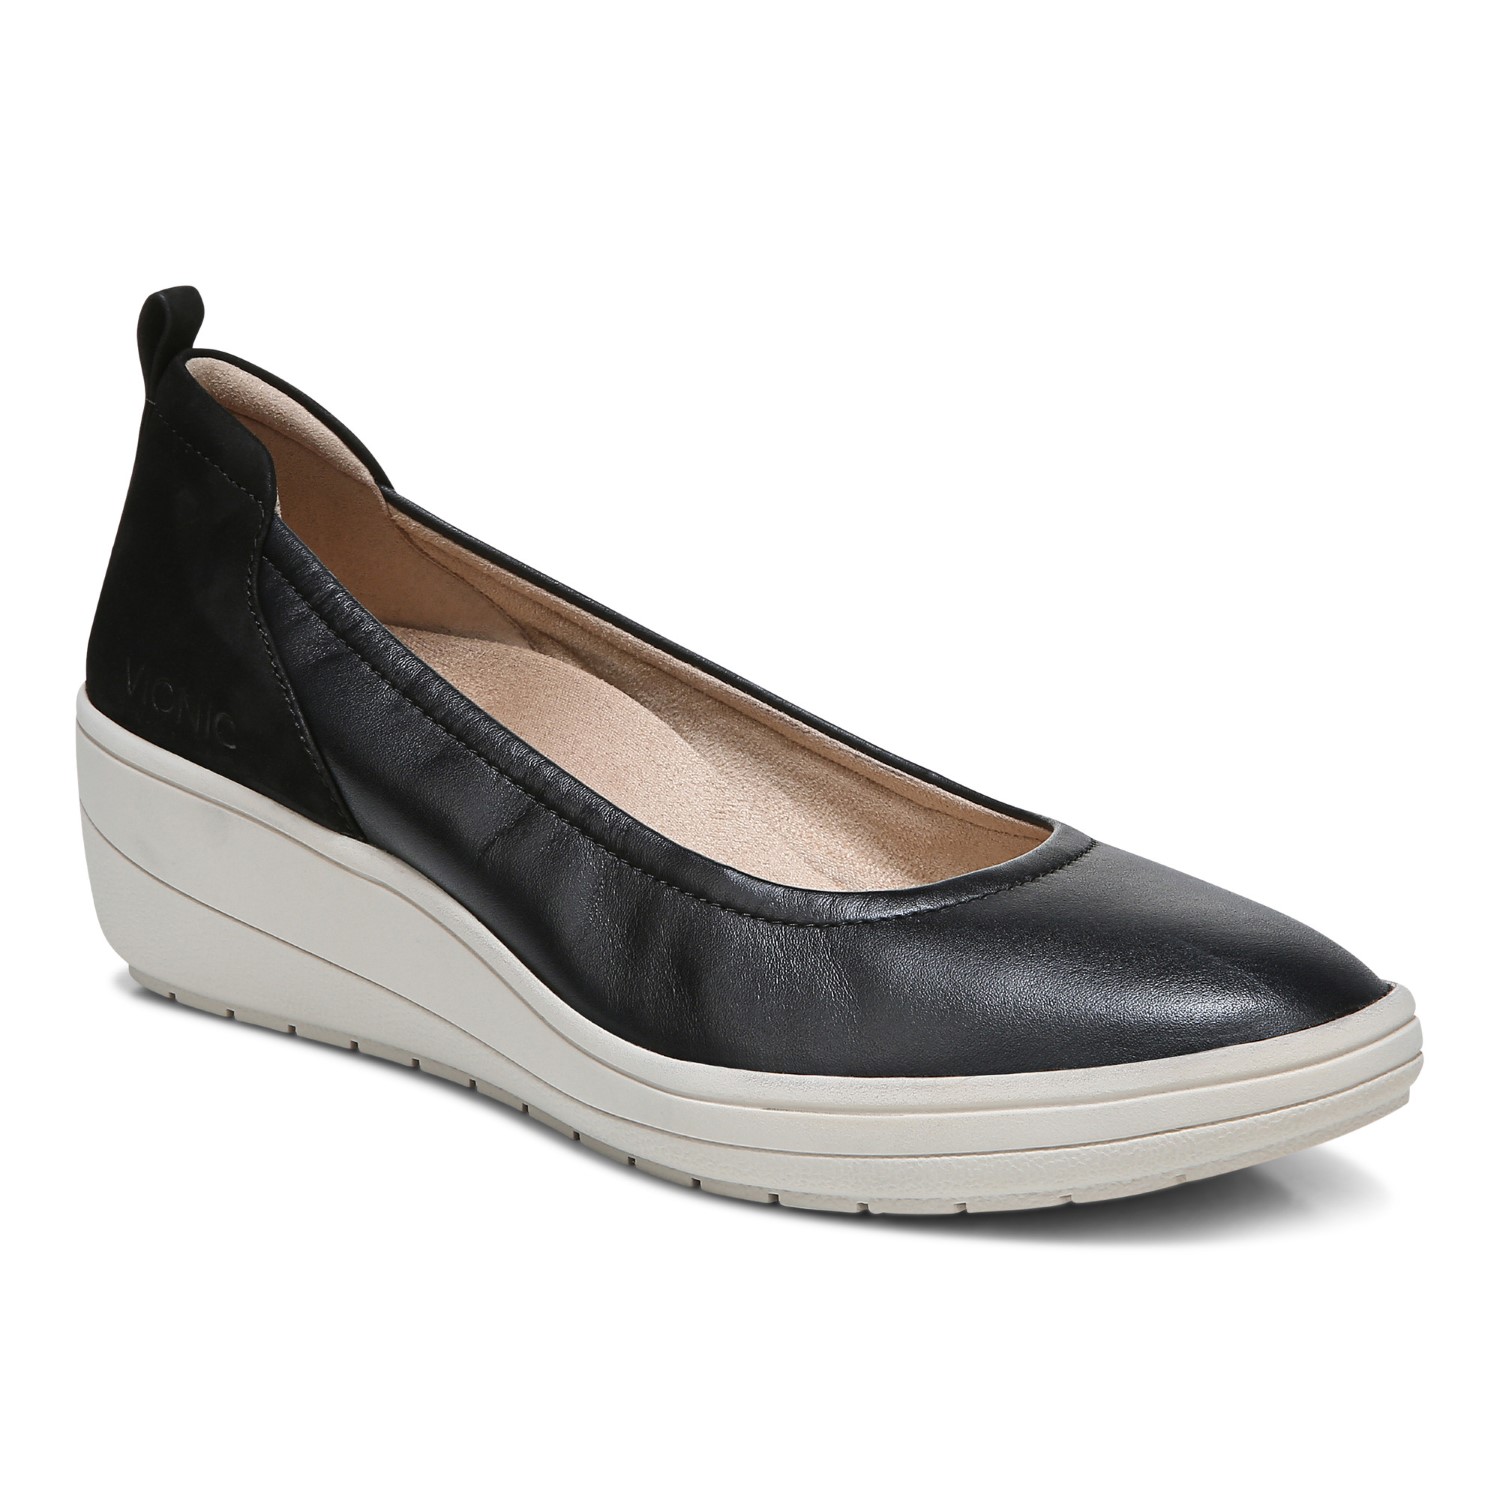 Vionic Jacey Women's Slip-on Wedge Shoe Black - 9 Medium for sale ...